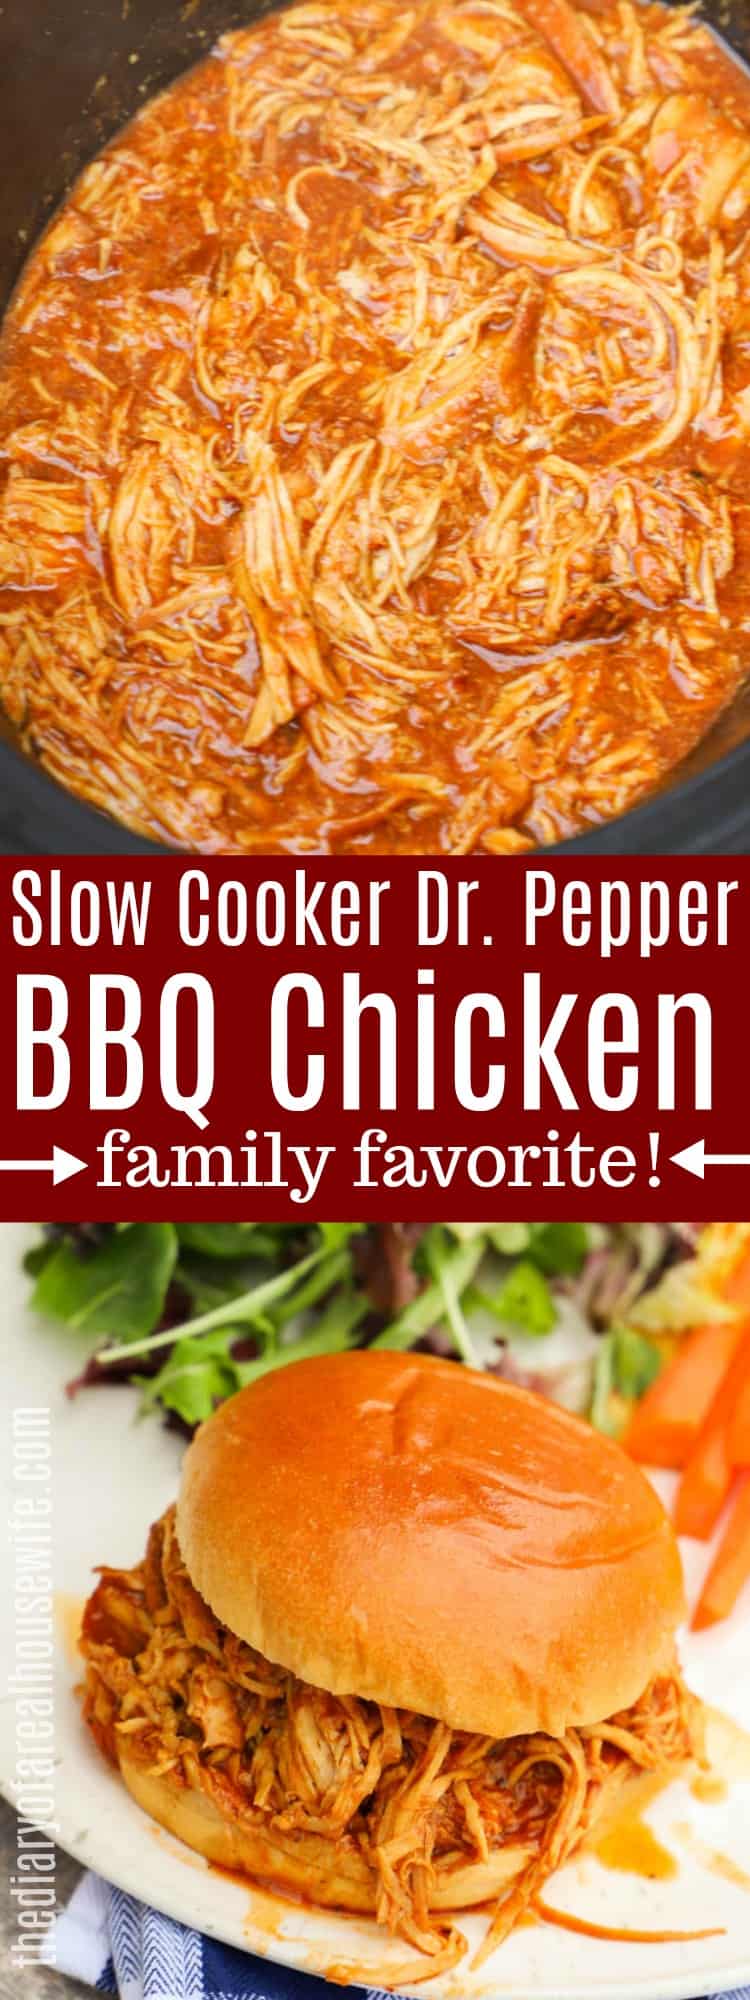 Slow Cooker Dr. Pepper BBQ Chicken